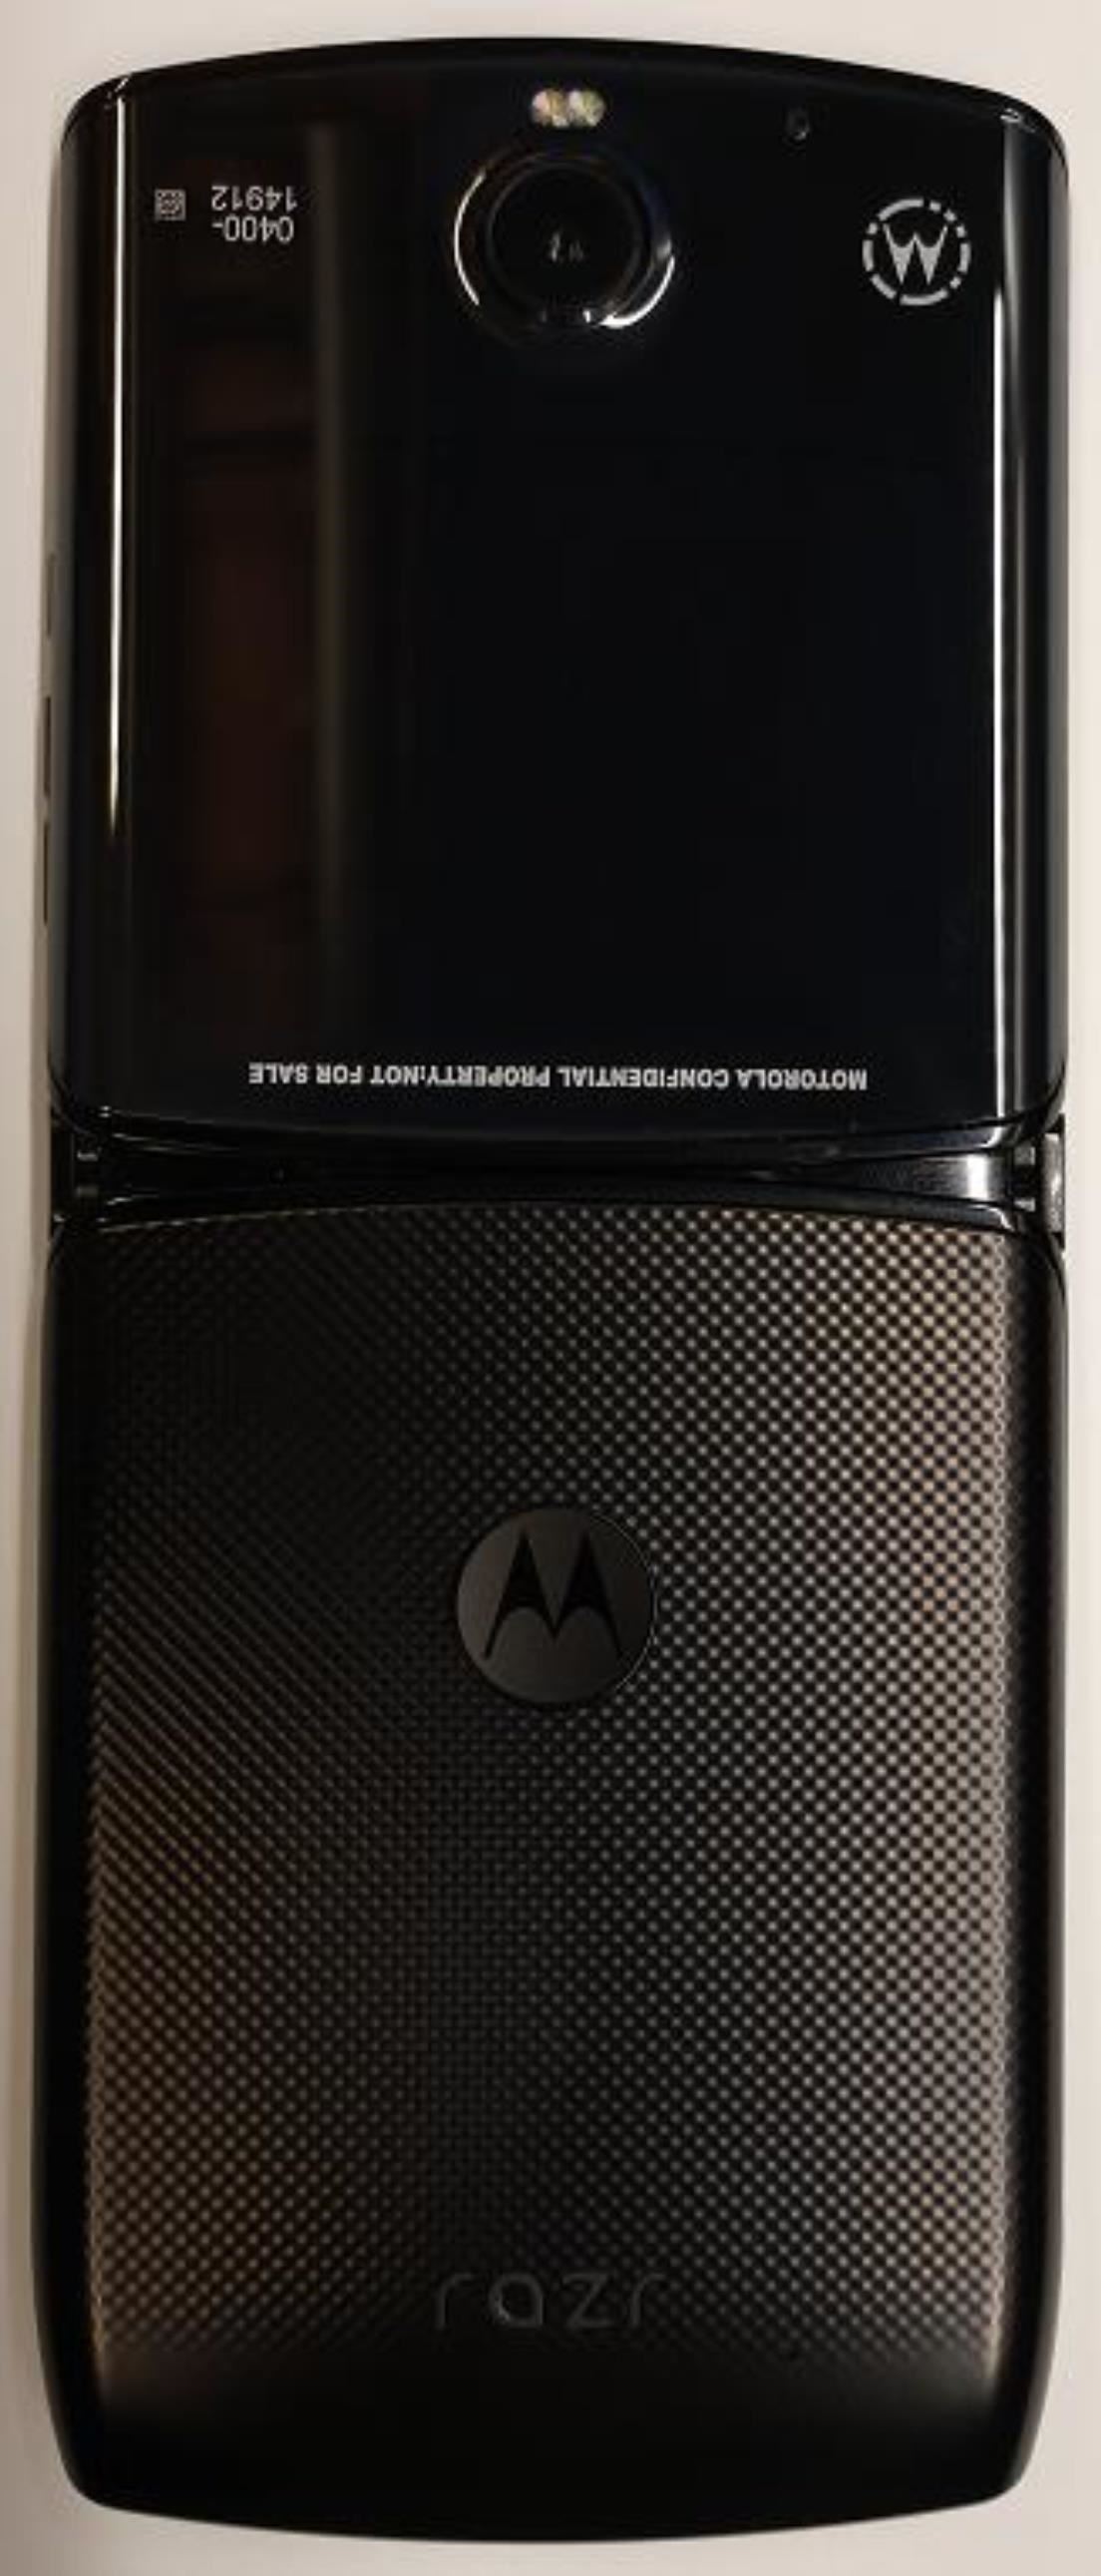 New Photos of the 2019 Motorola RAZR Surface in FCC Filing, Reveal Dimensions, Notch & Biometrics